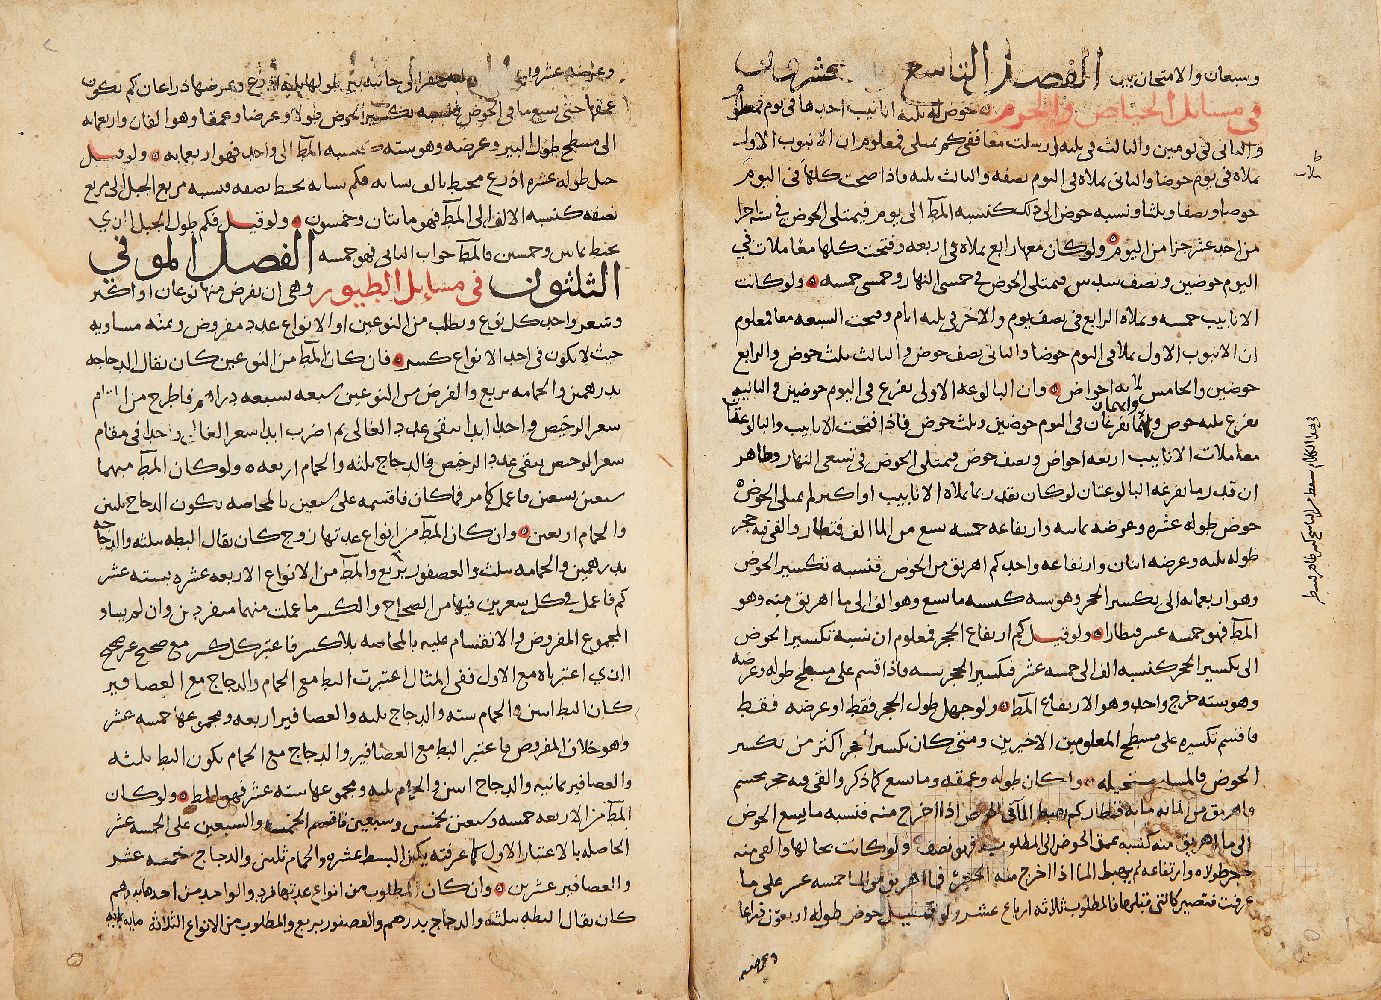 Third and final part of Kitab al-Mueunuh fi Elm al-Hisab w'Aljabr (Help in the Science of Arithmetic - Image 2 of 2